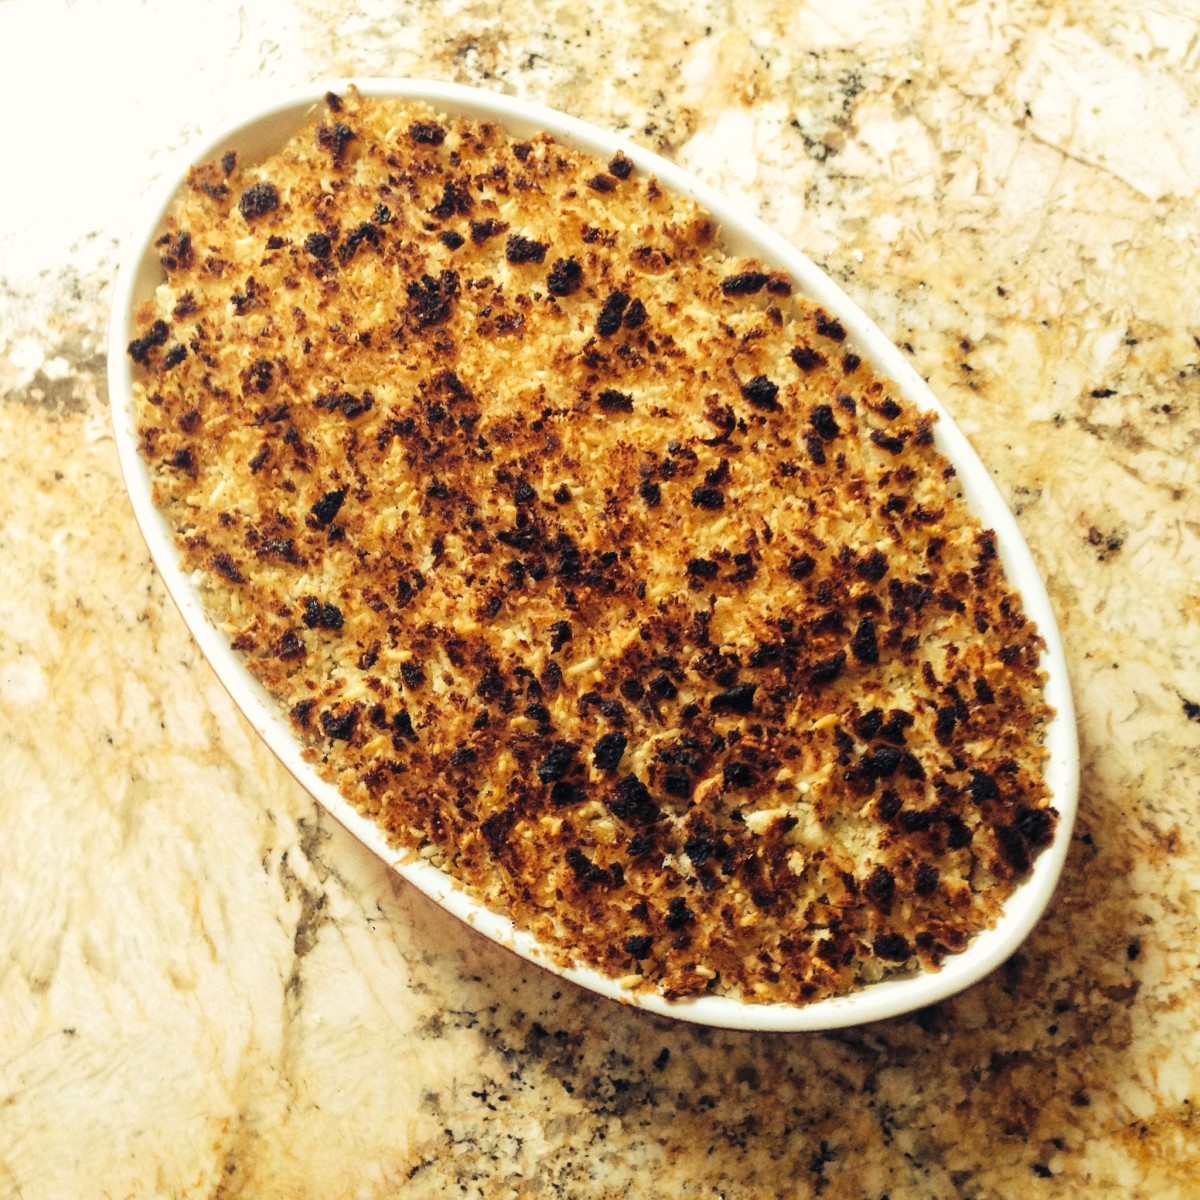 Layered Mashed Potato & Mushroom Casserole with Black Truffle Drizzle